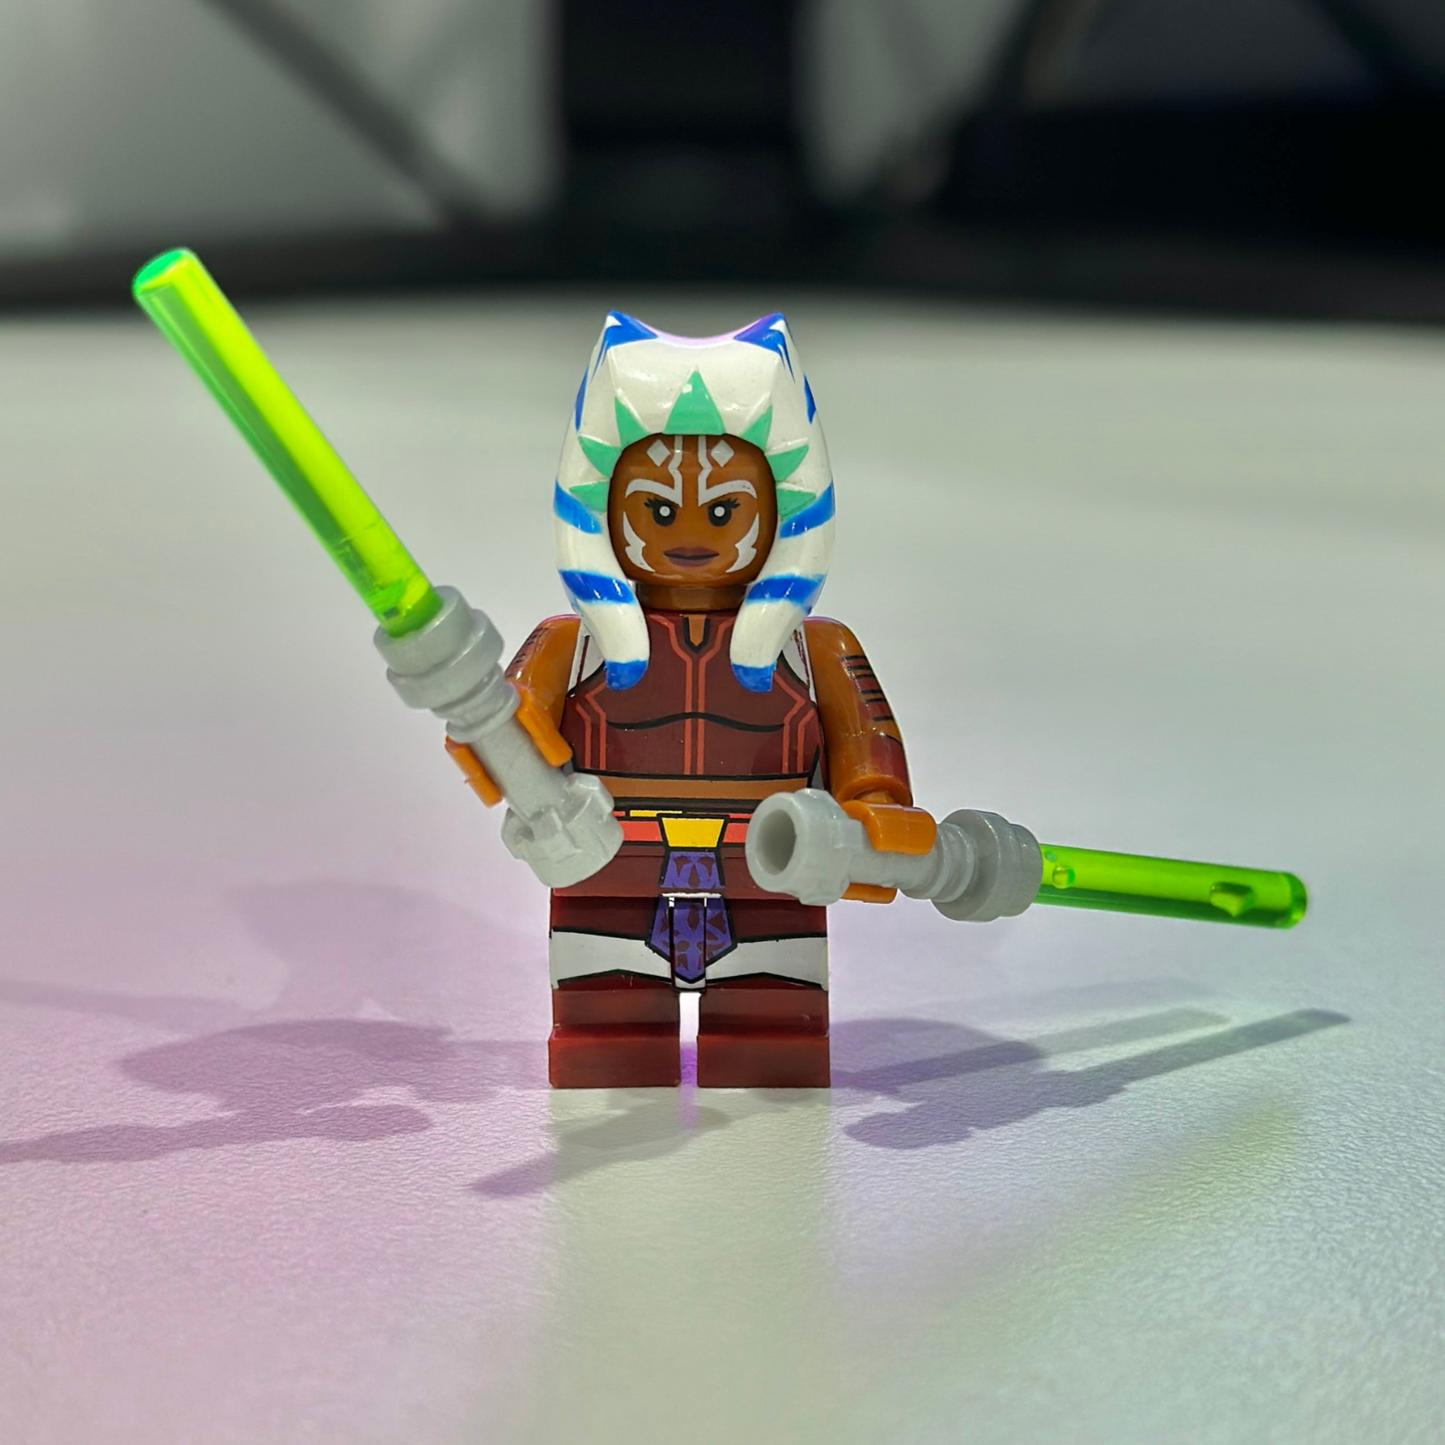 Star Wars Ahsoka Tano (young) Minifigure - Jedi Padawan